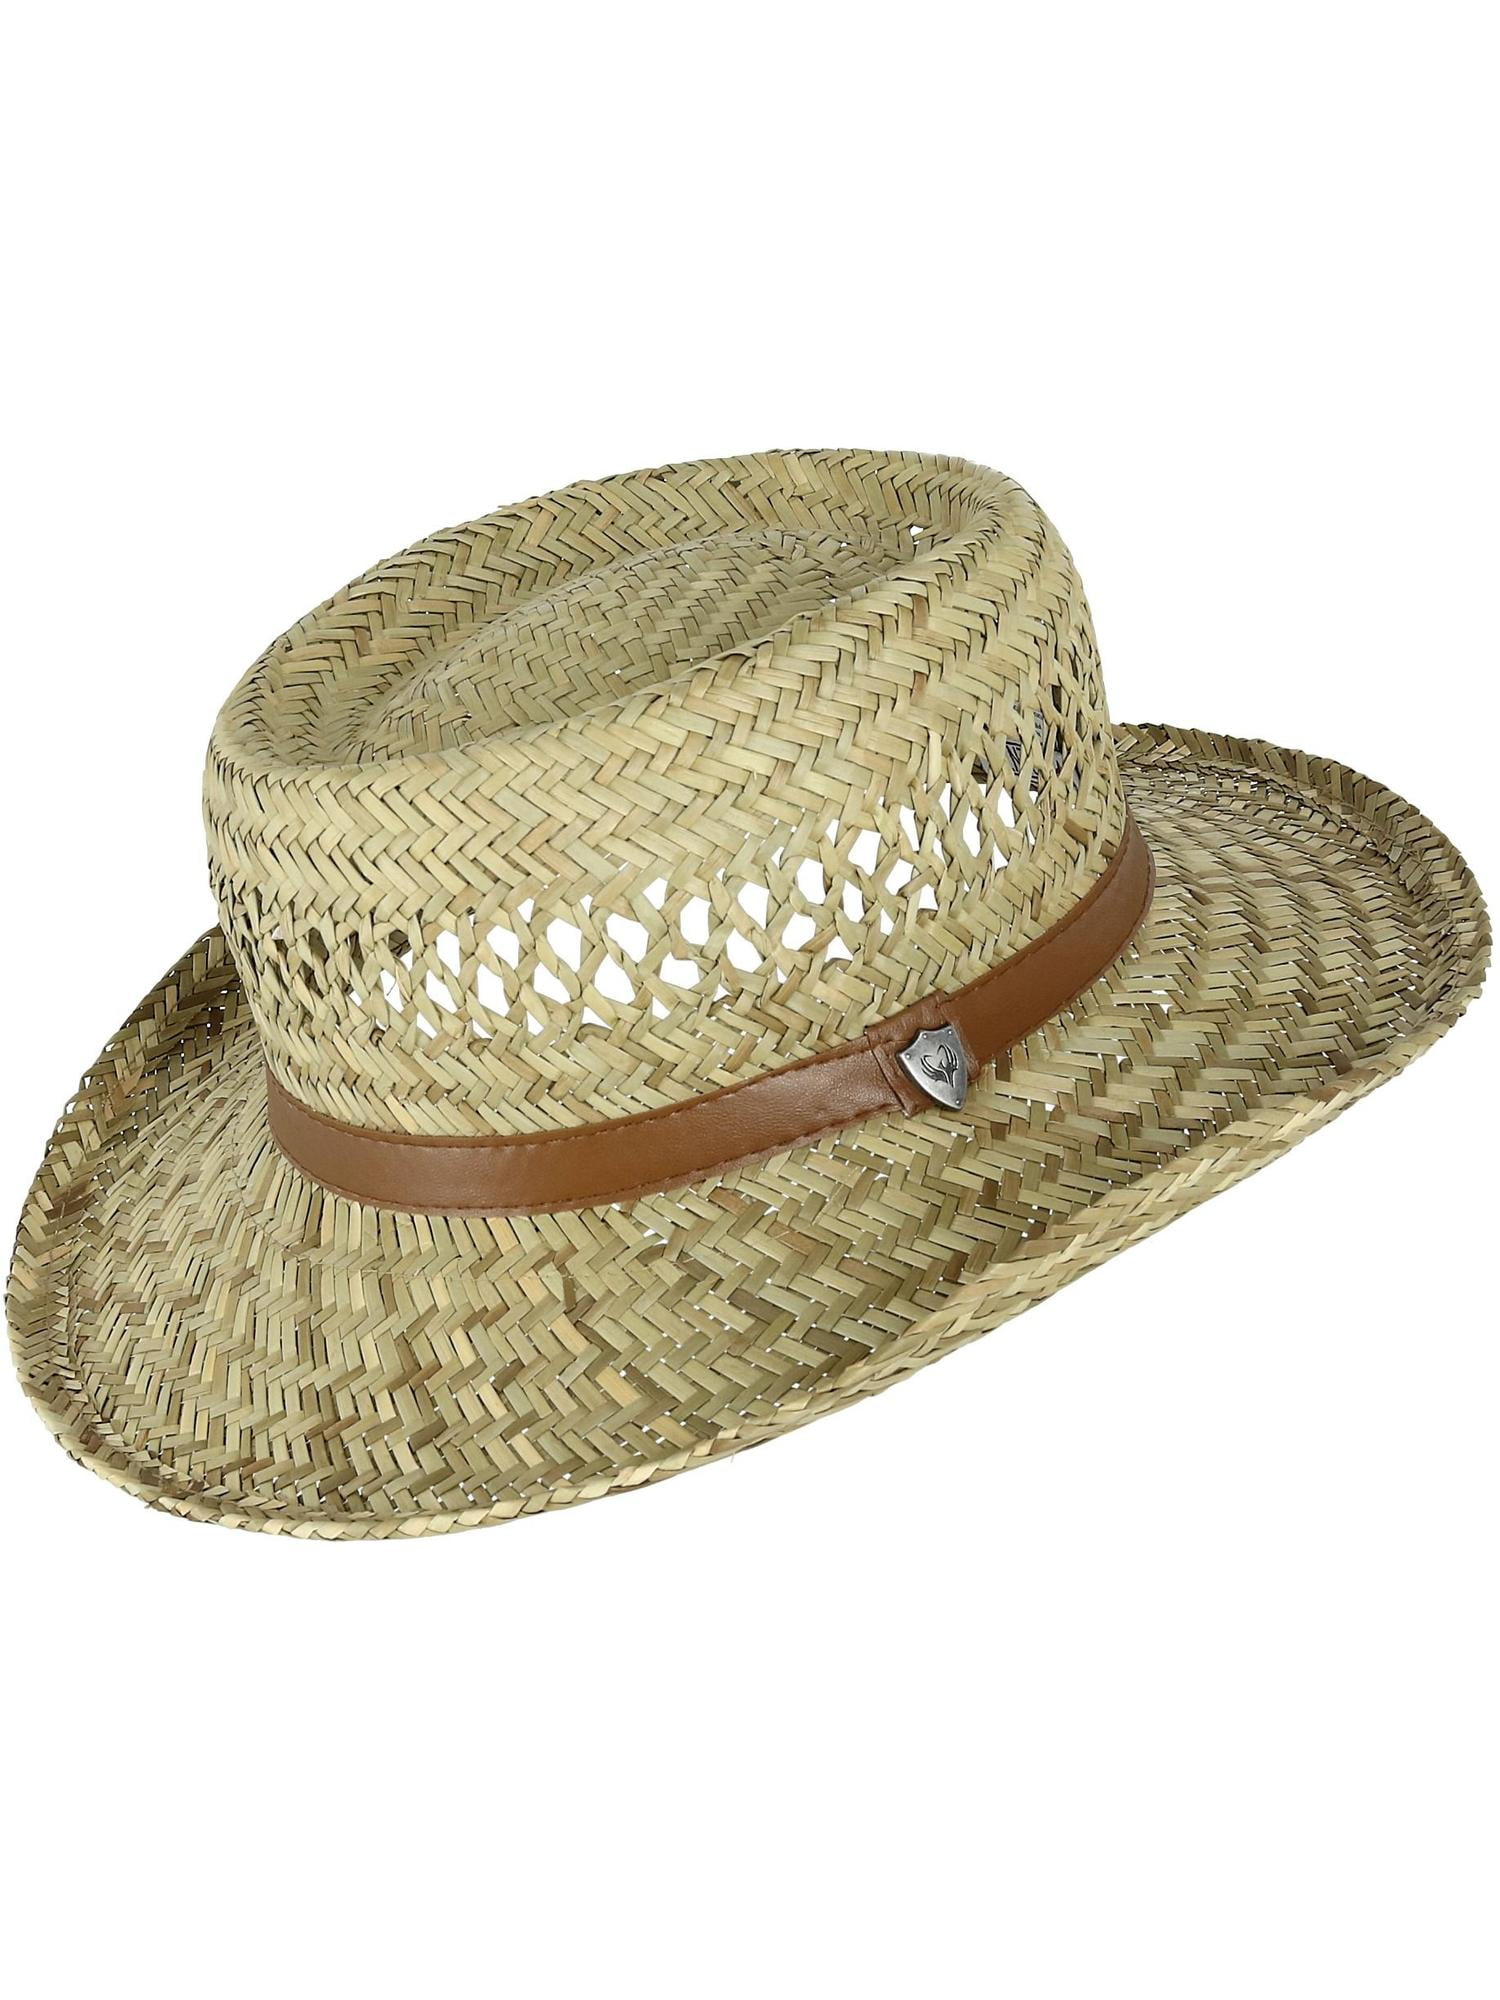 Heiheiup Adult Casual Fashion Outdoors Winter Cowboy Straw Cap Light  Sunshade Jazz Beach Hat Cap Hat Stretcher Large 